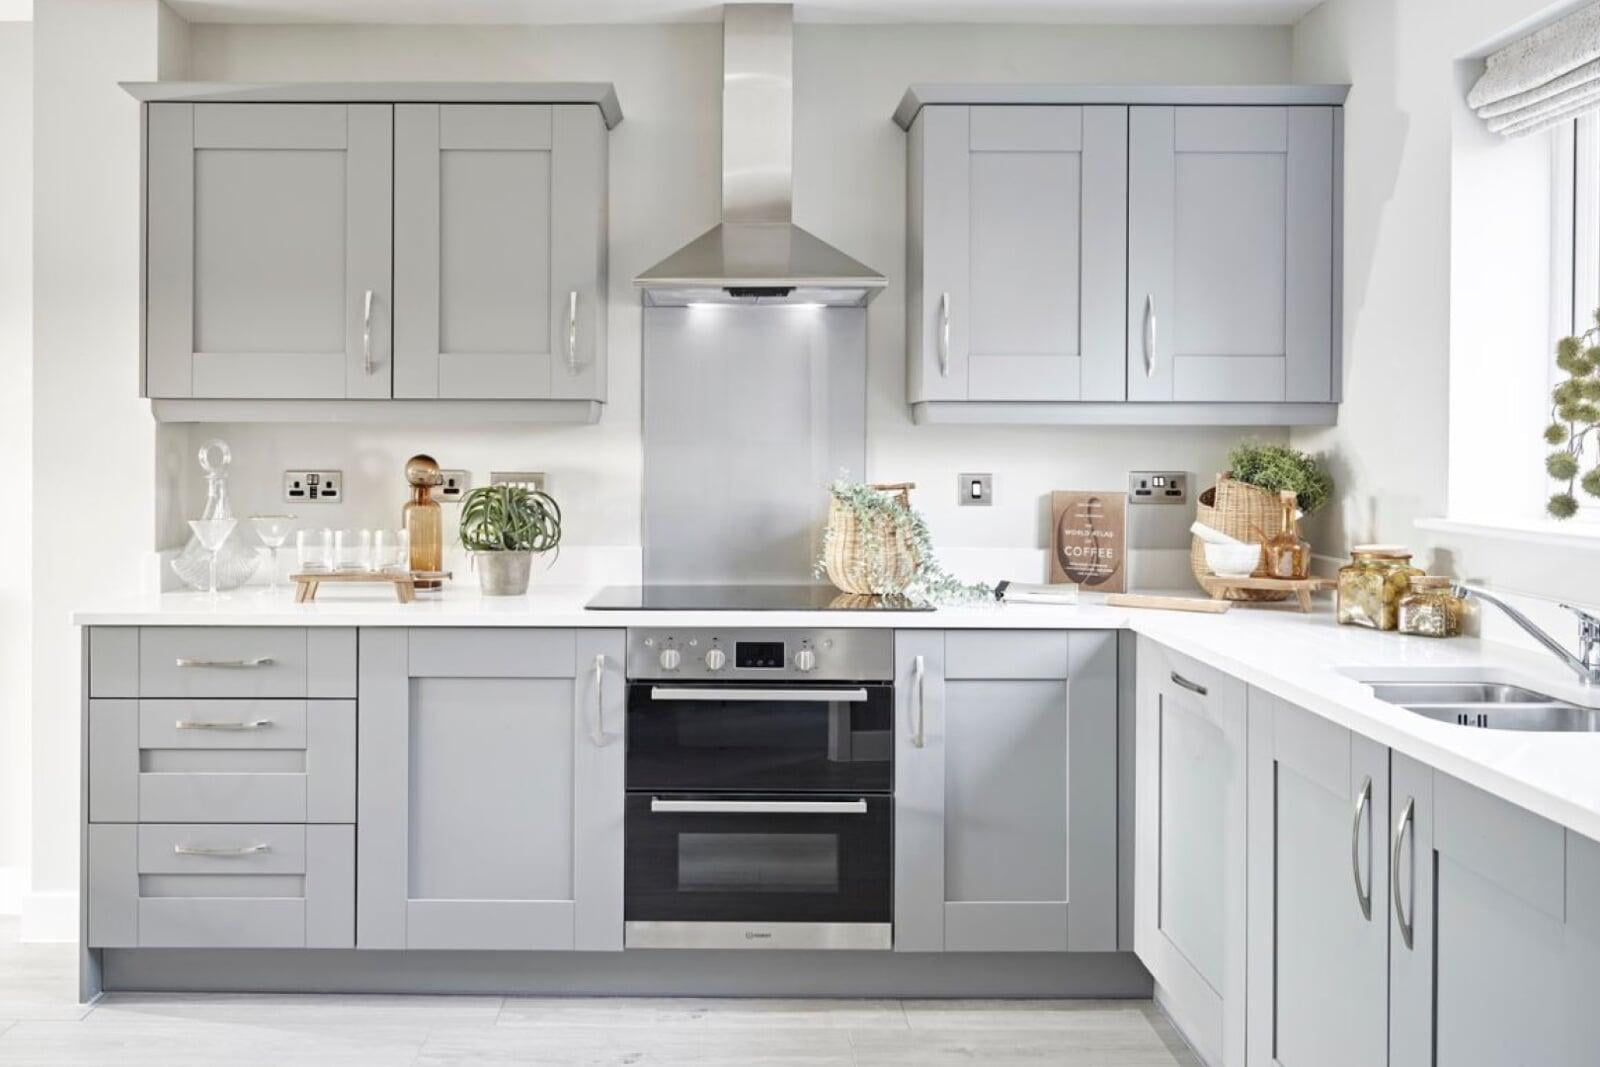 Home Reach Flex shared ownership example kitchen at Edwalton Fields